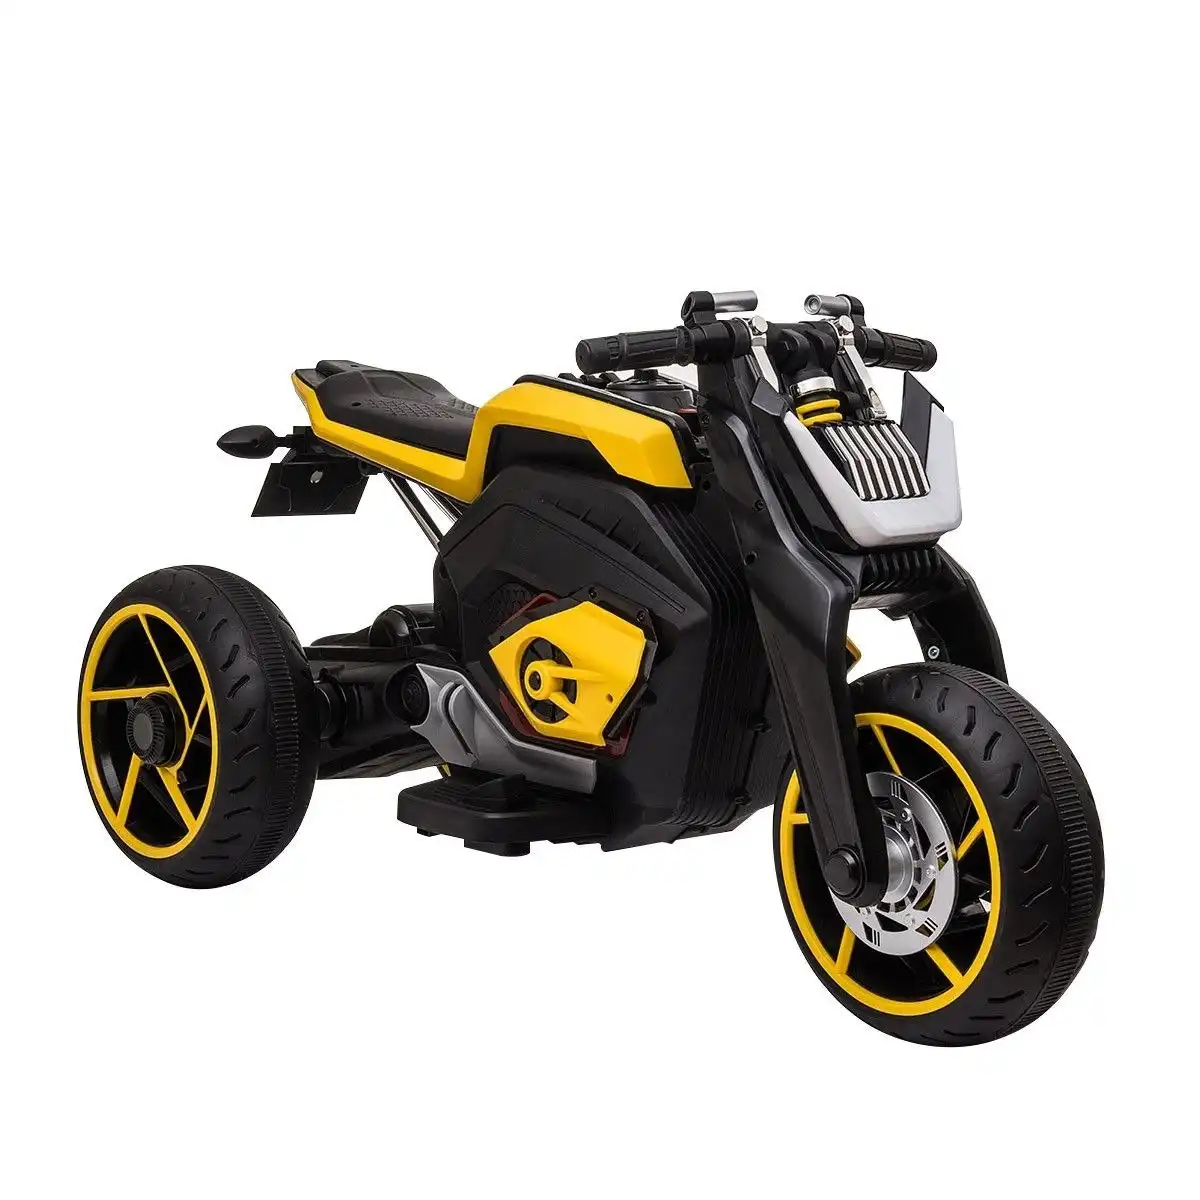 Ausway 6V Kids Electric Ride On Motorcycle Triple Wheel Toy Motorbike